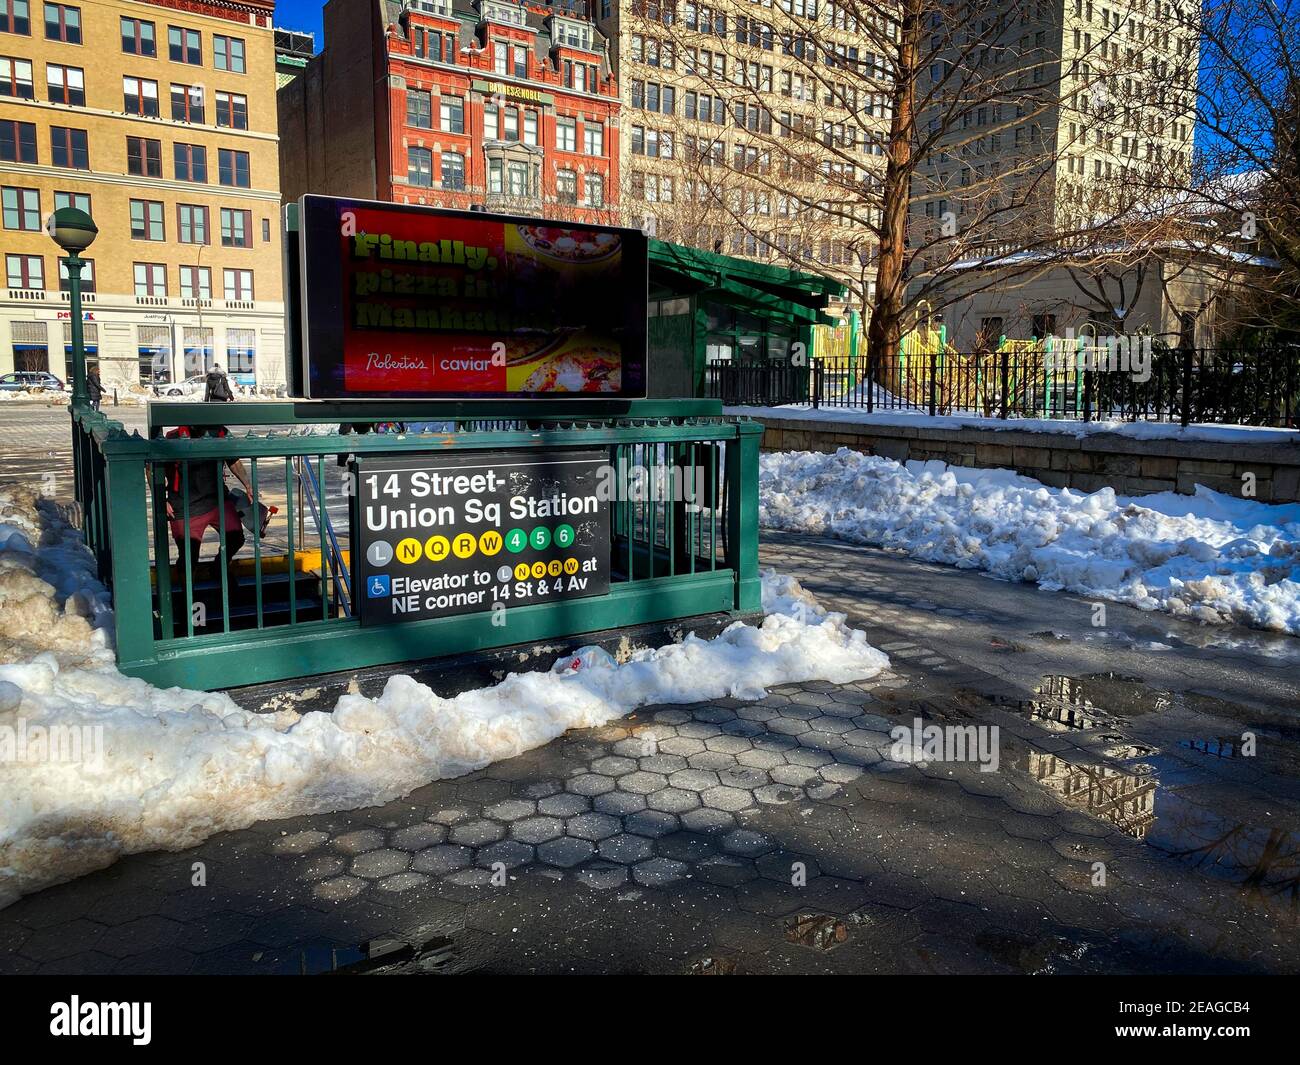 New York, NY, USA - Feb 9, 2021: Union Square subway entrance surrounded by snow Stock Photo